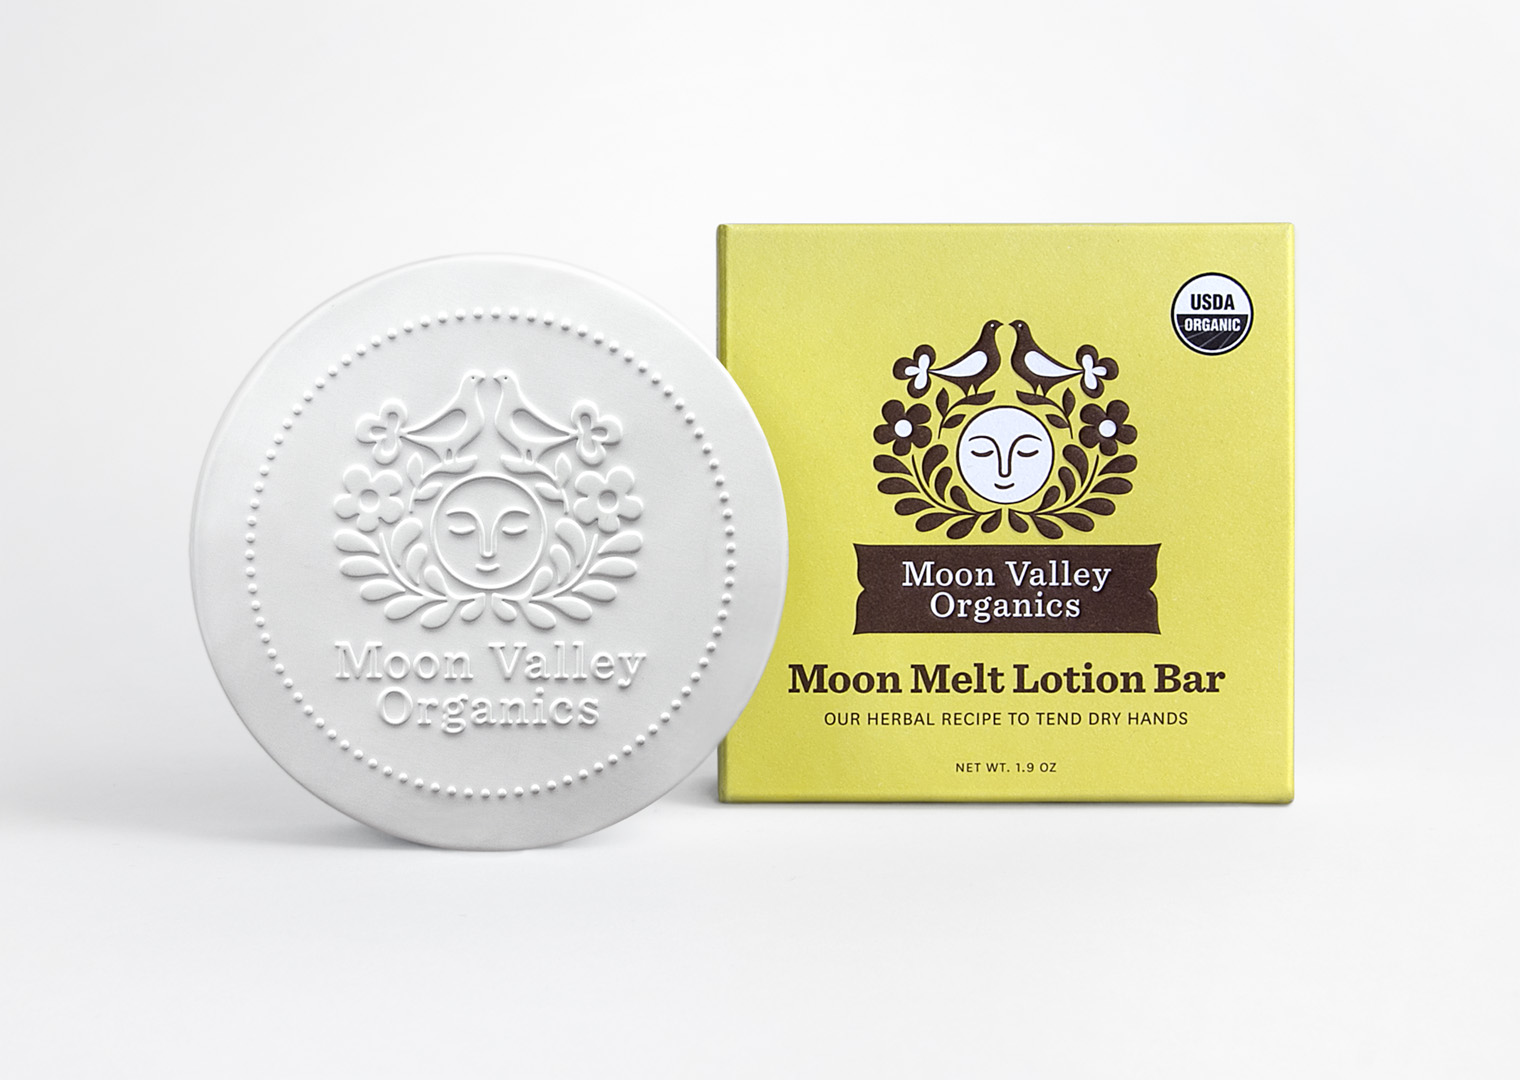 Moon Valley Organics lotion bar packaging